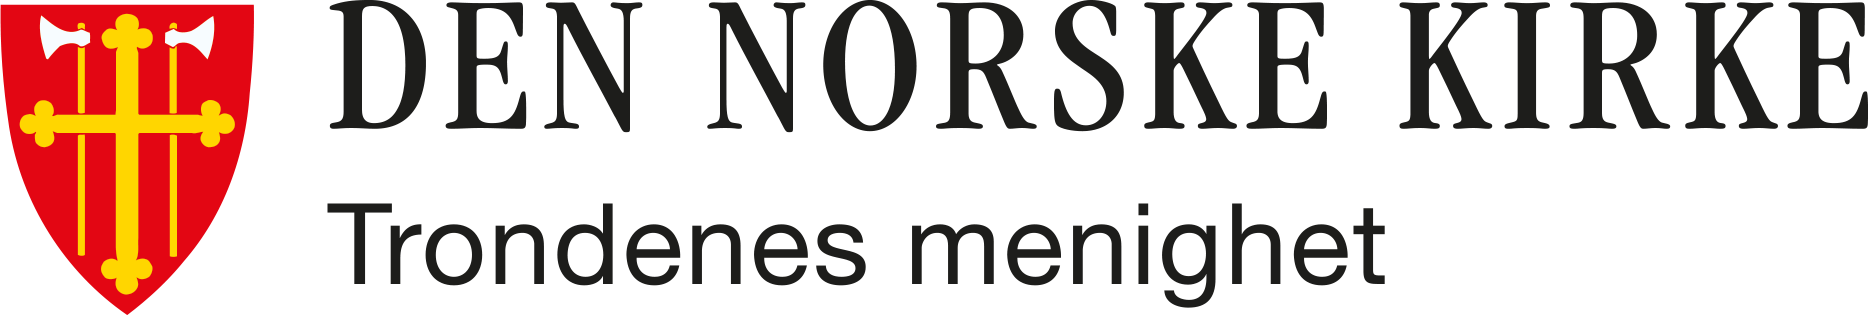 Trondenes menighet logo